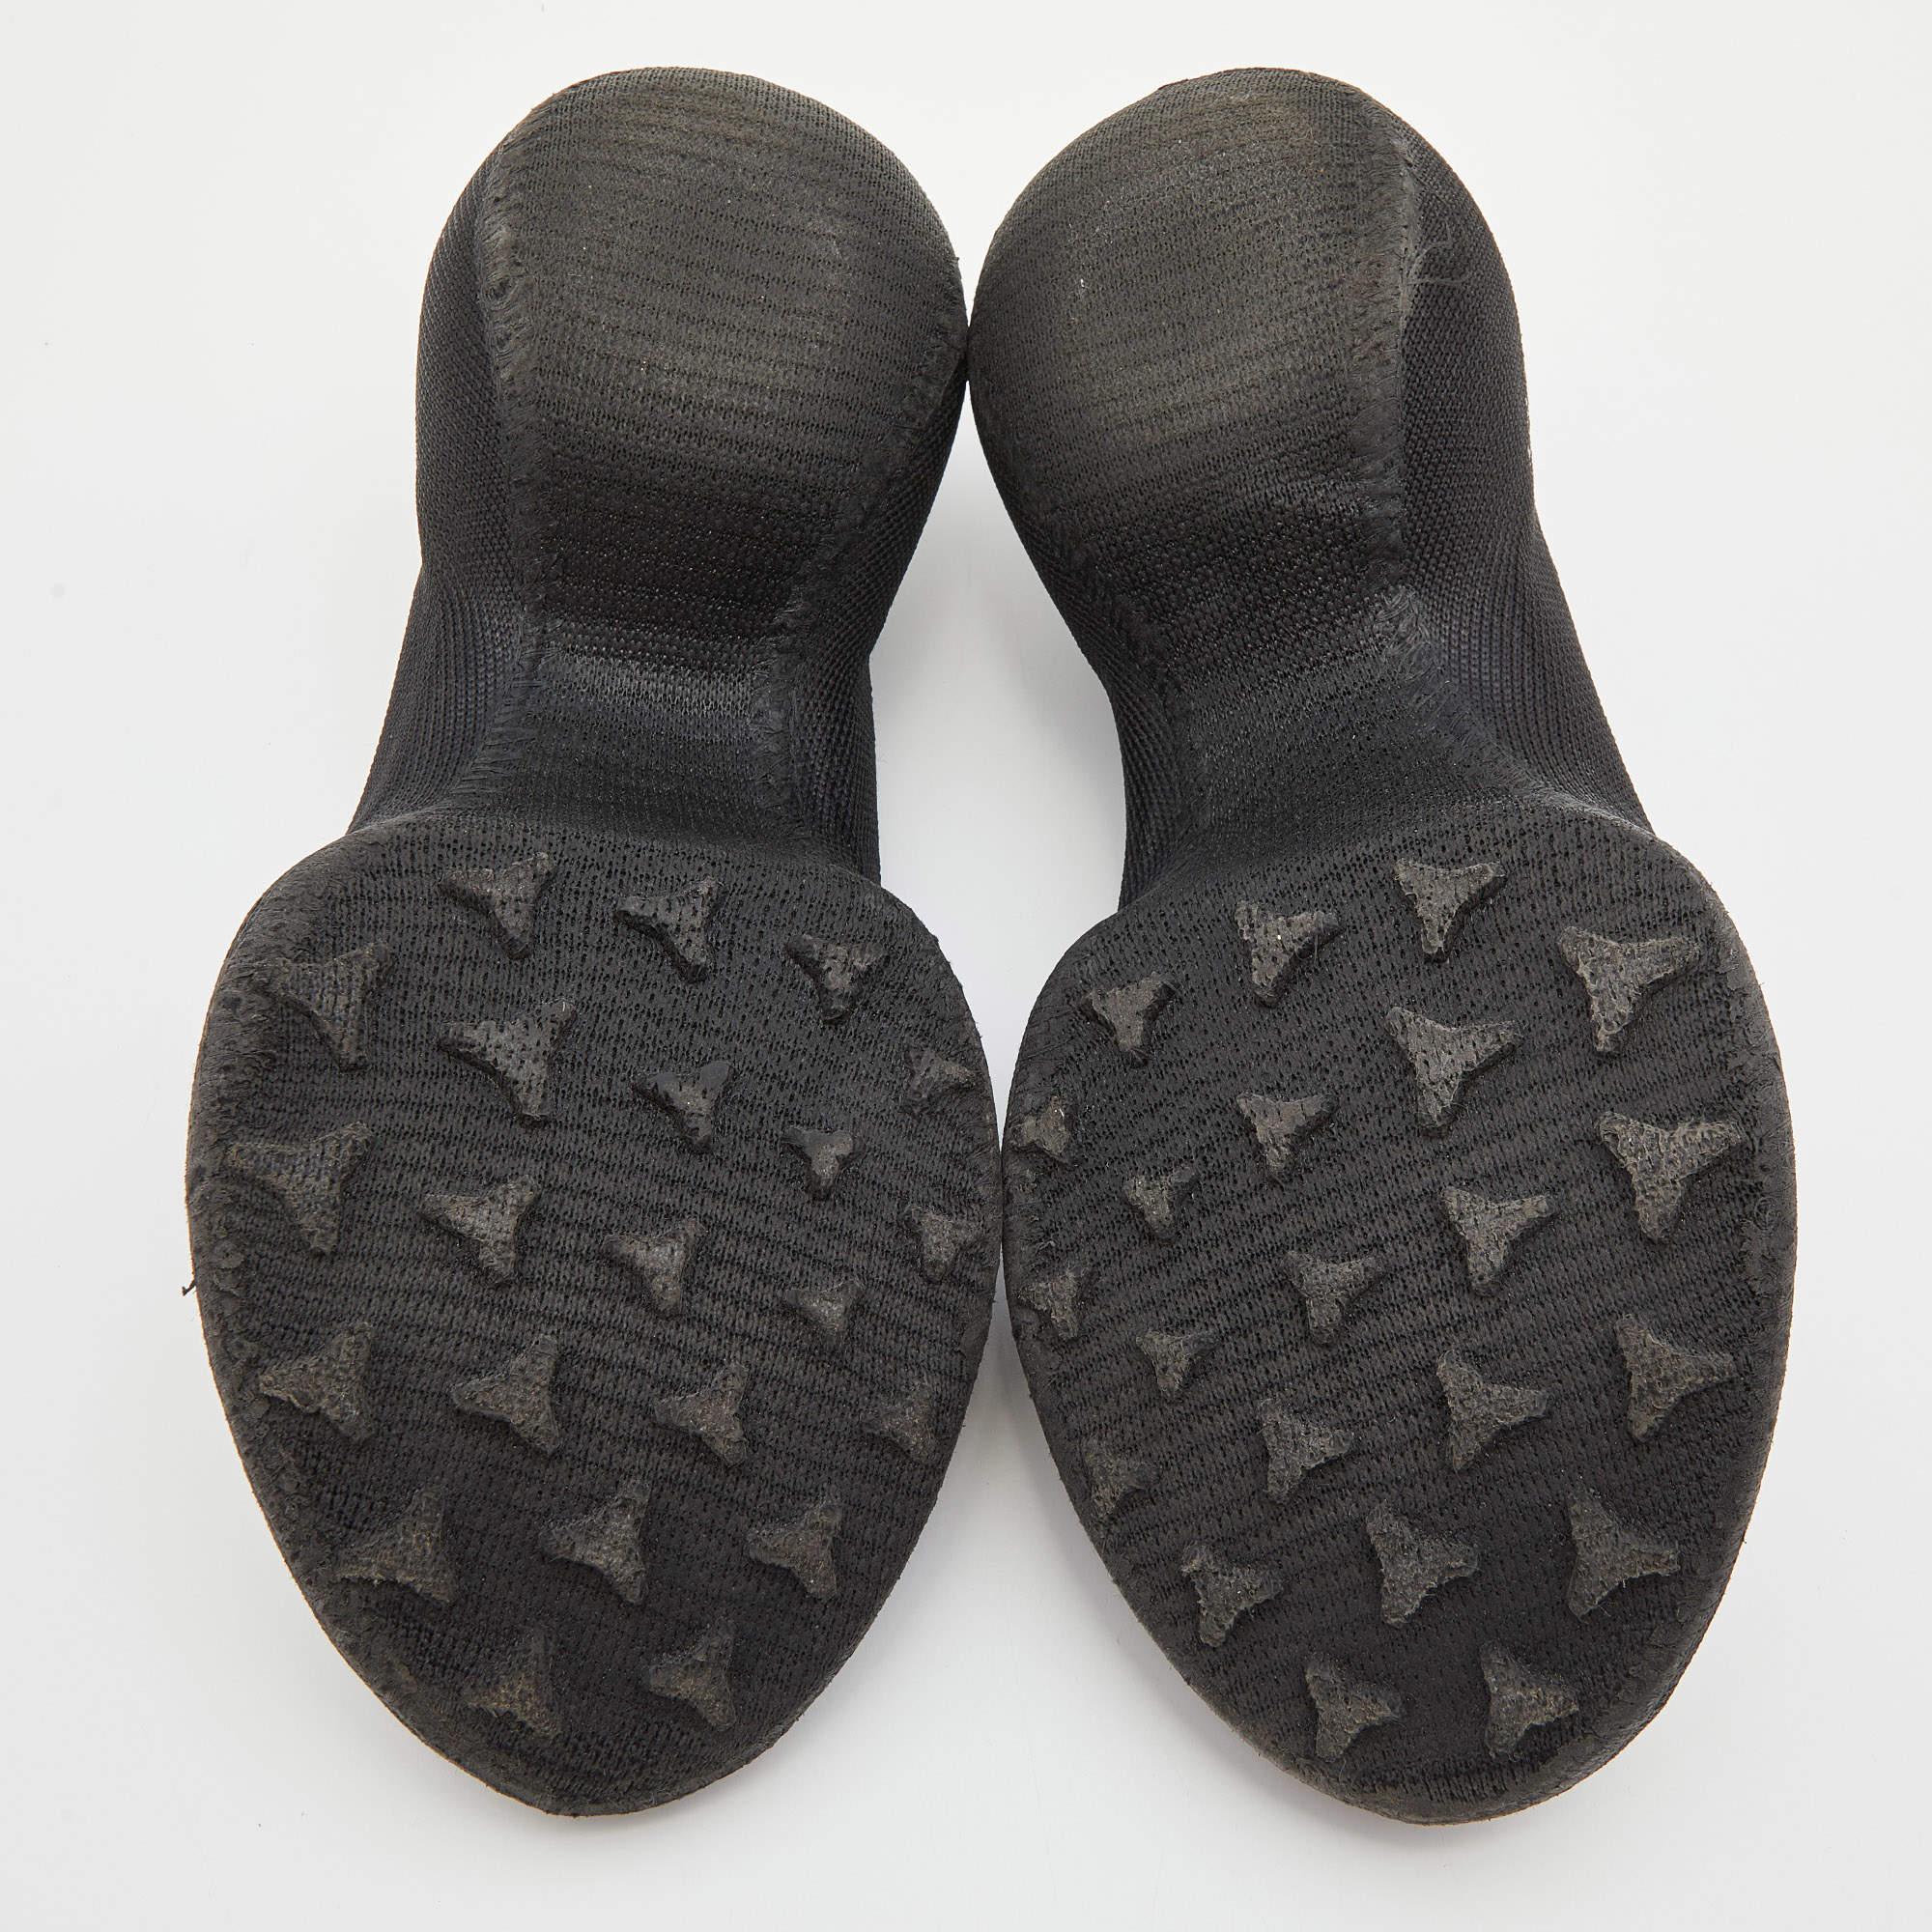 Givenchy Black Stretch Knit TK-360 Sneakers Size 36 5